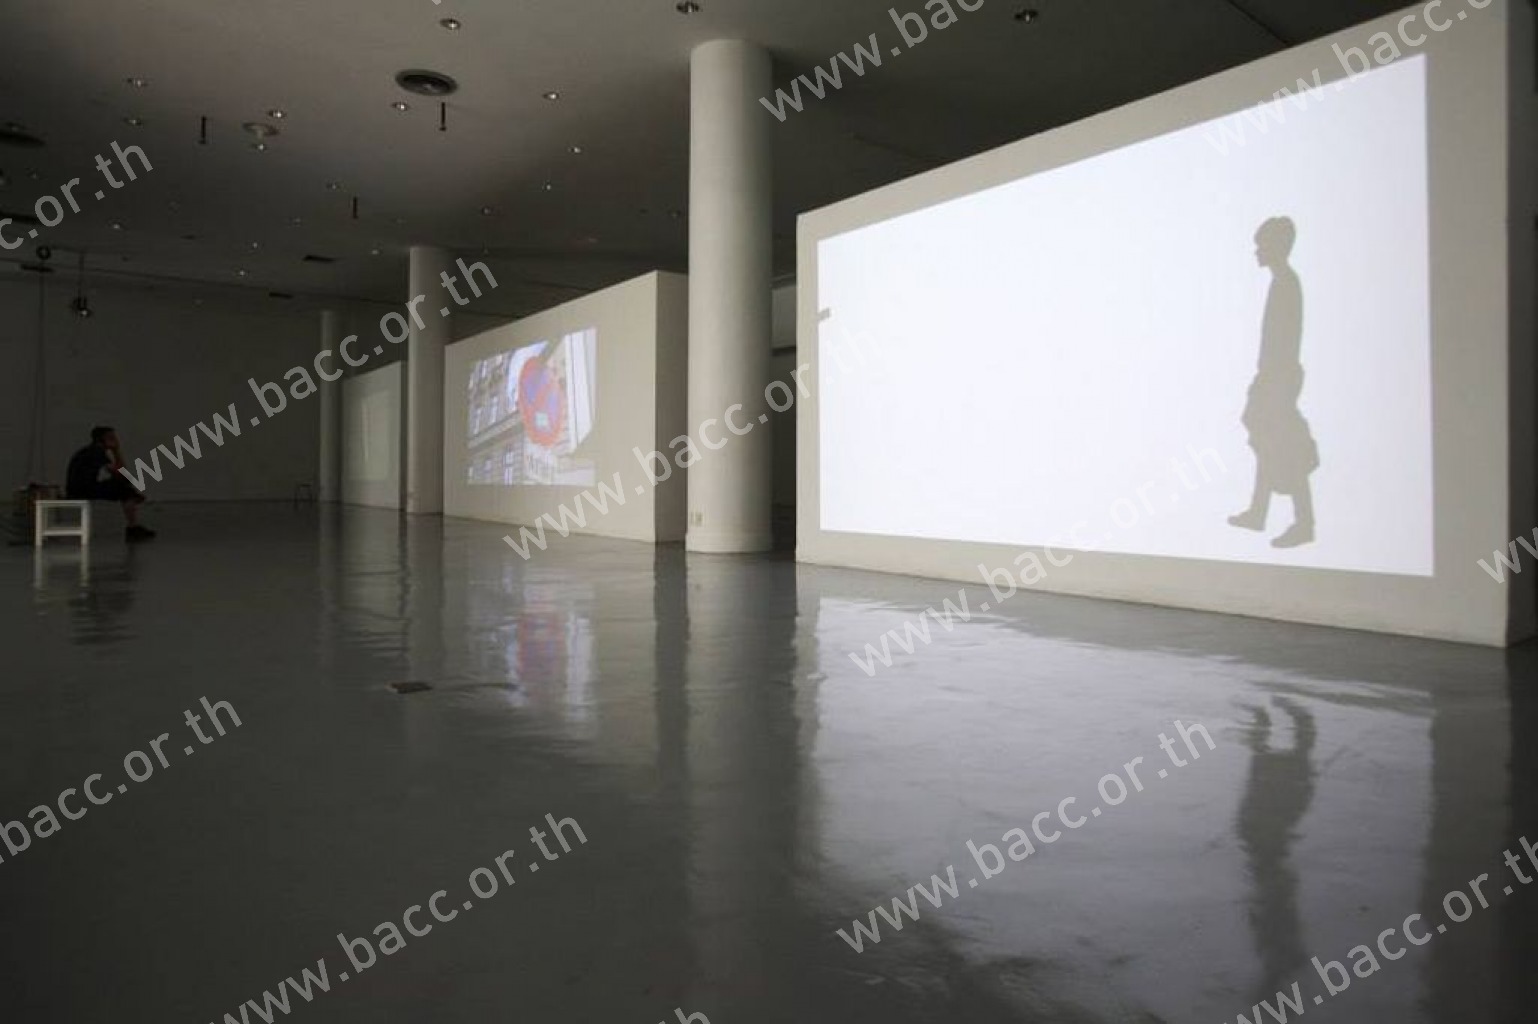 Experimental Video Art Exhibition, Thai-European Friendship 2004-2014 (EVA project)